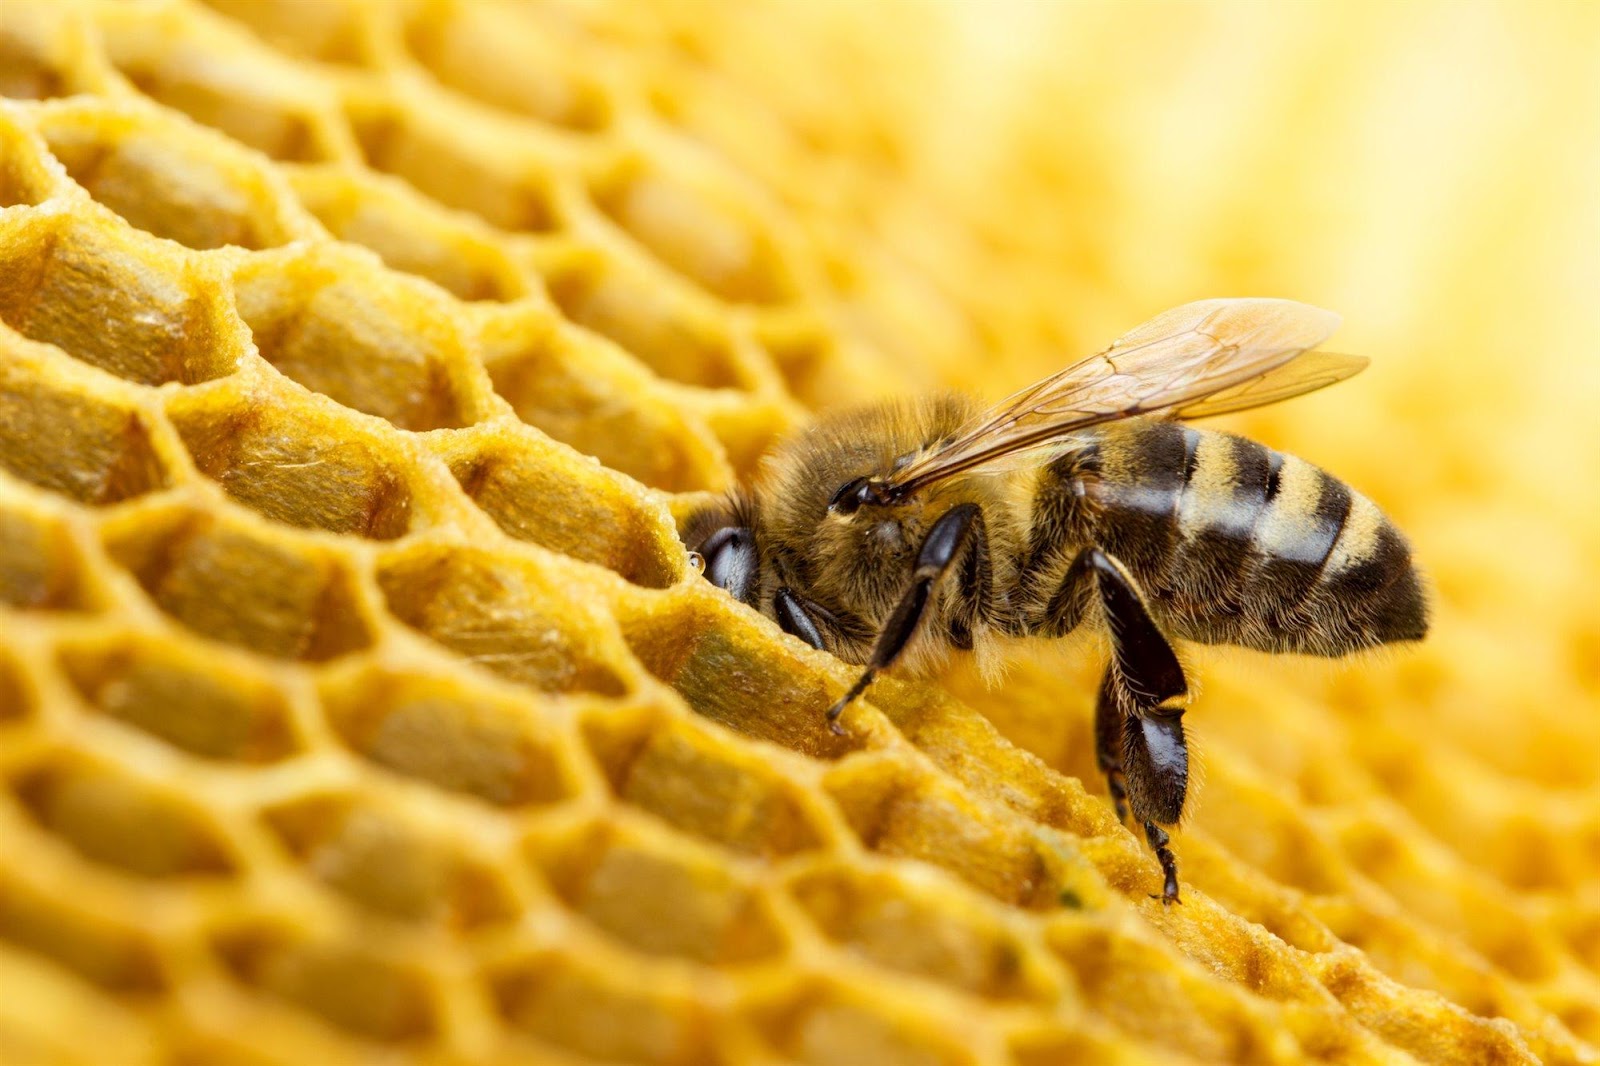 Cuánto sabes sobre abejas?